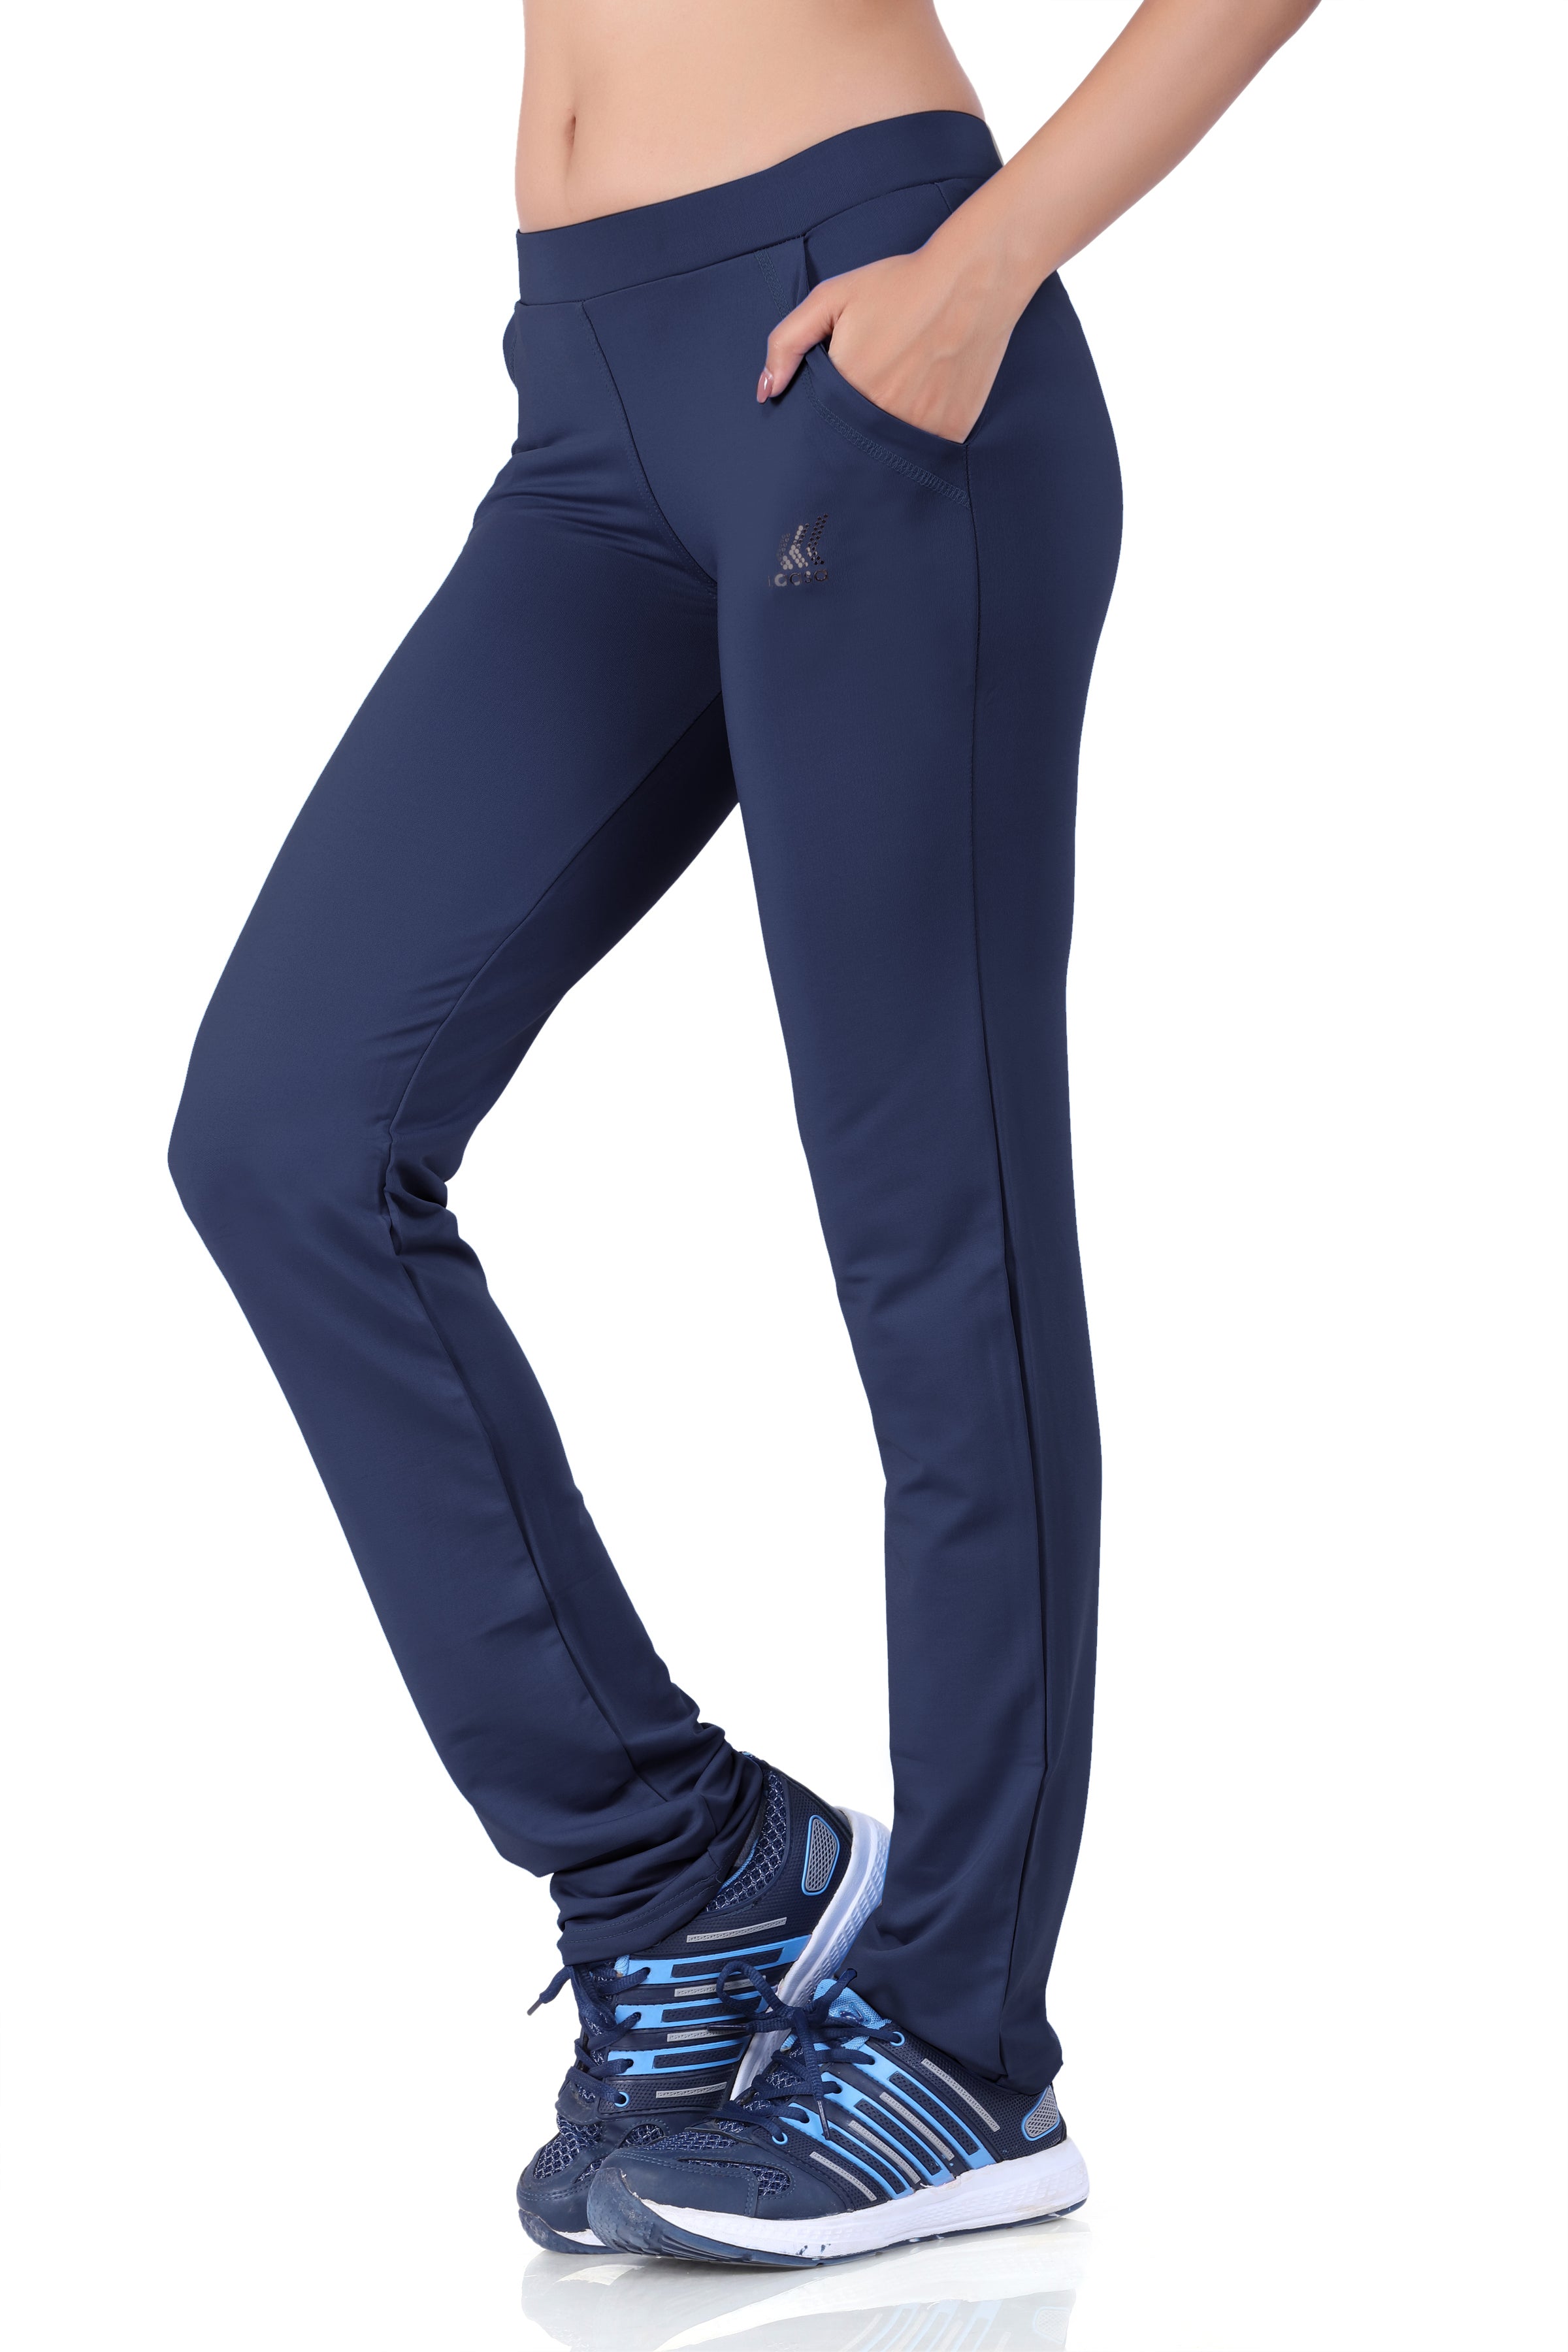 HRX Active Sweatpants Joggers Size Large Pockets Drawstring Navy Blue Logo  | eBay